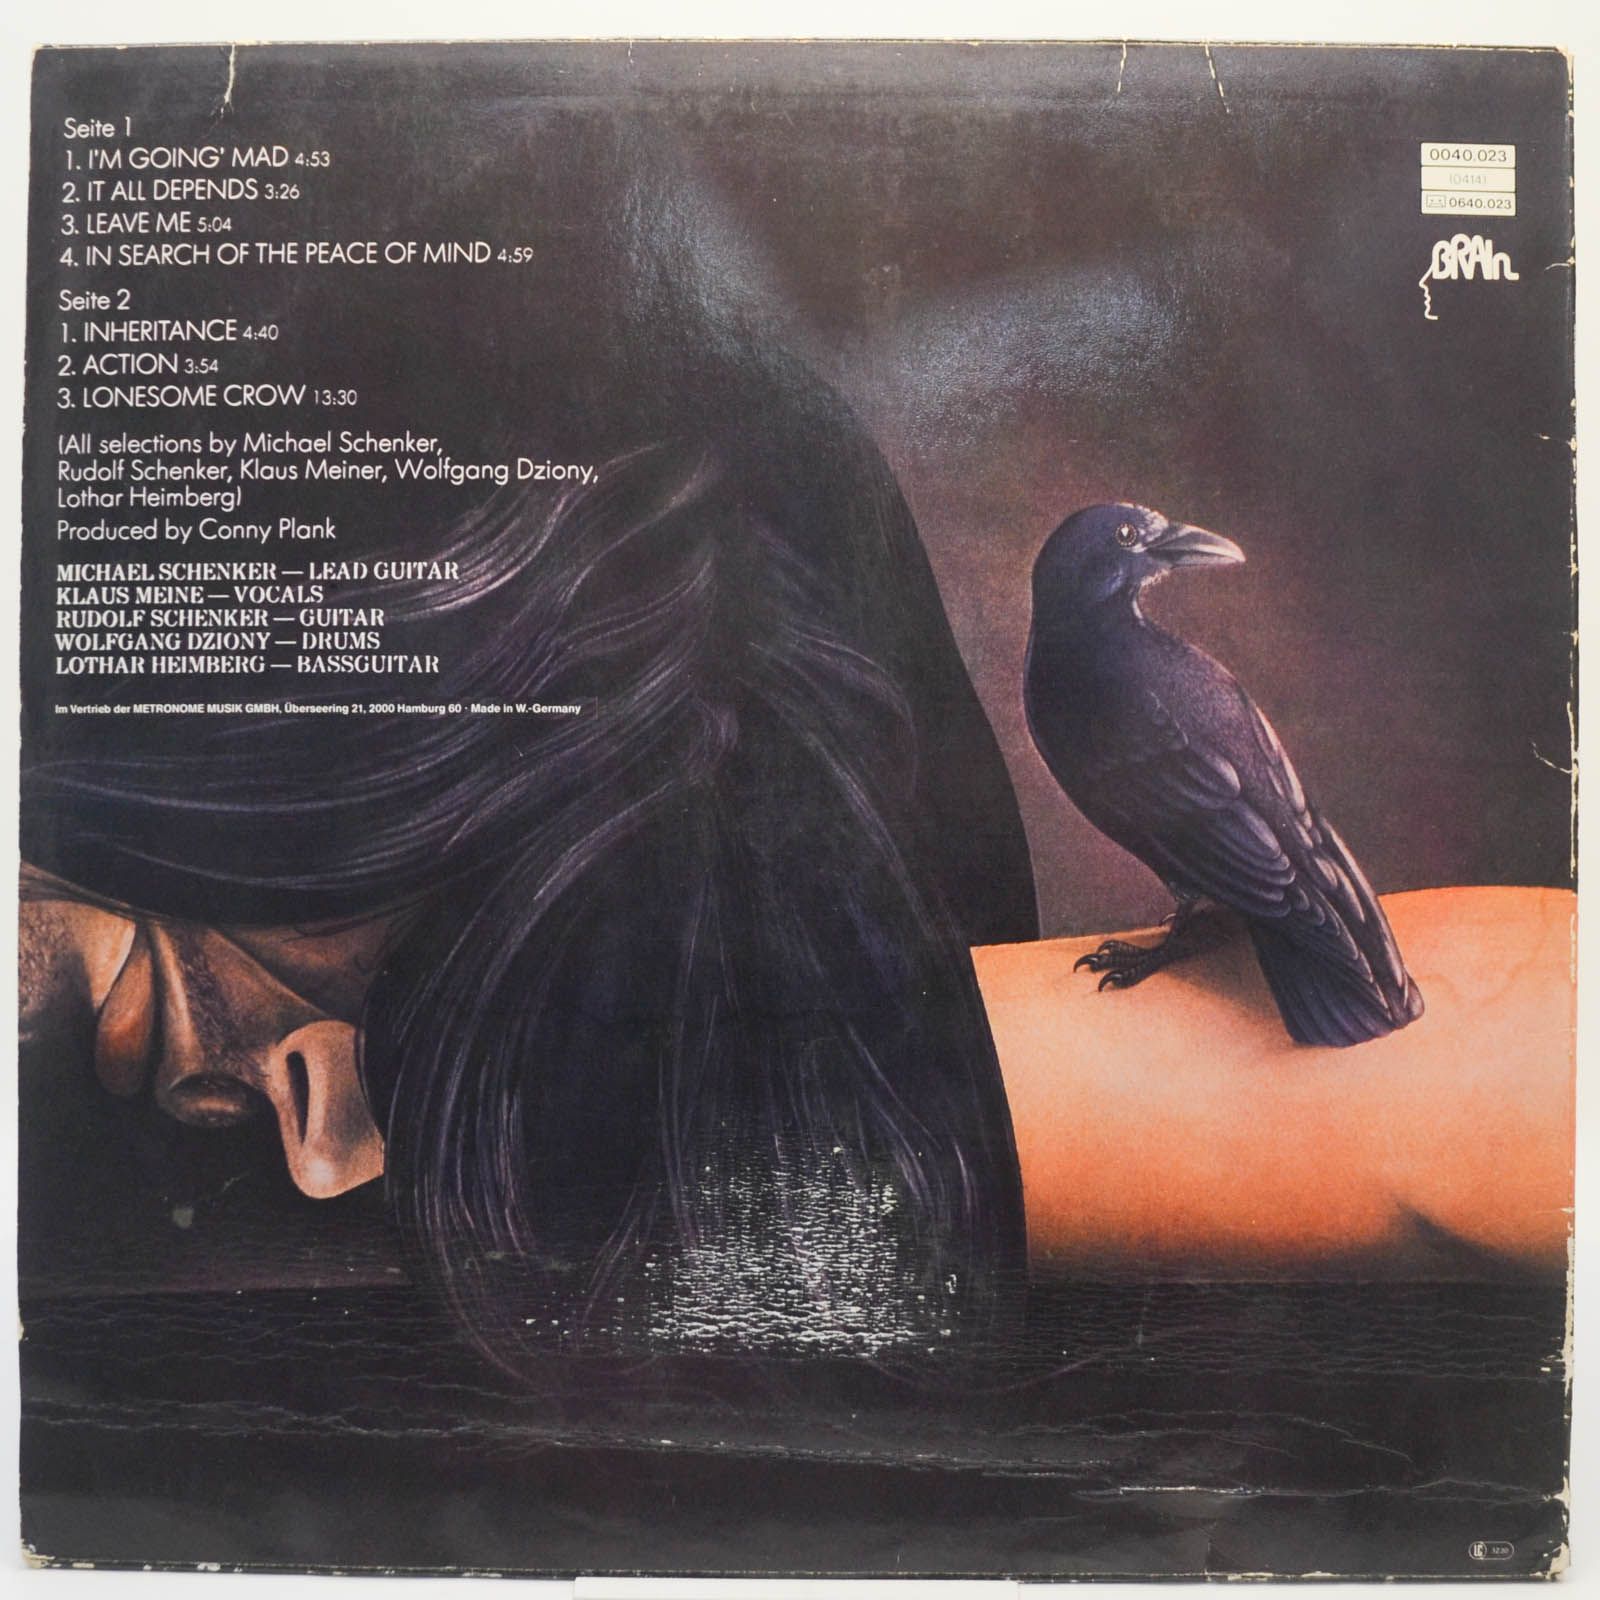 Scorpions — Lonesome Crow, 1972